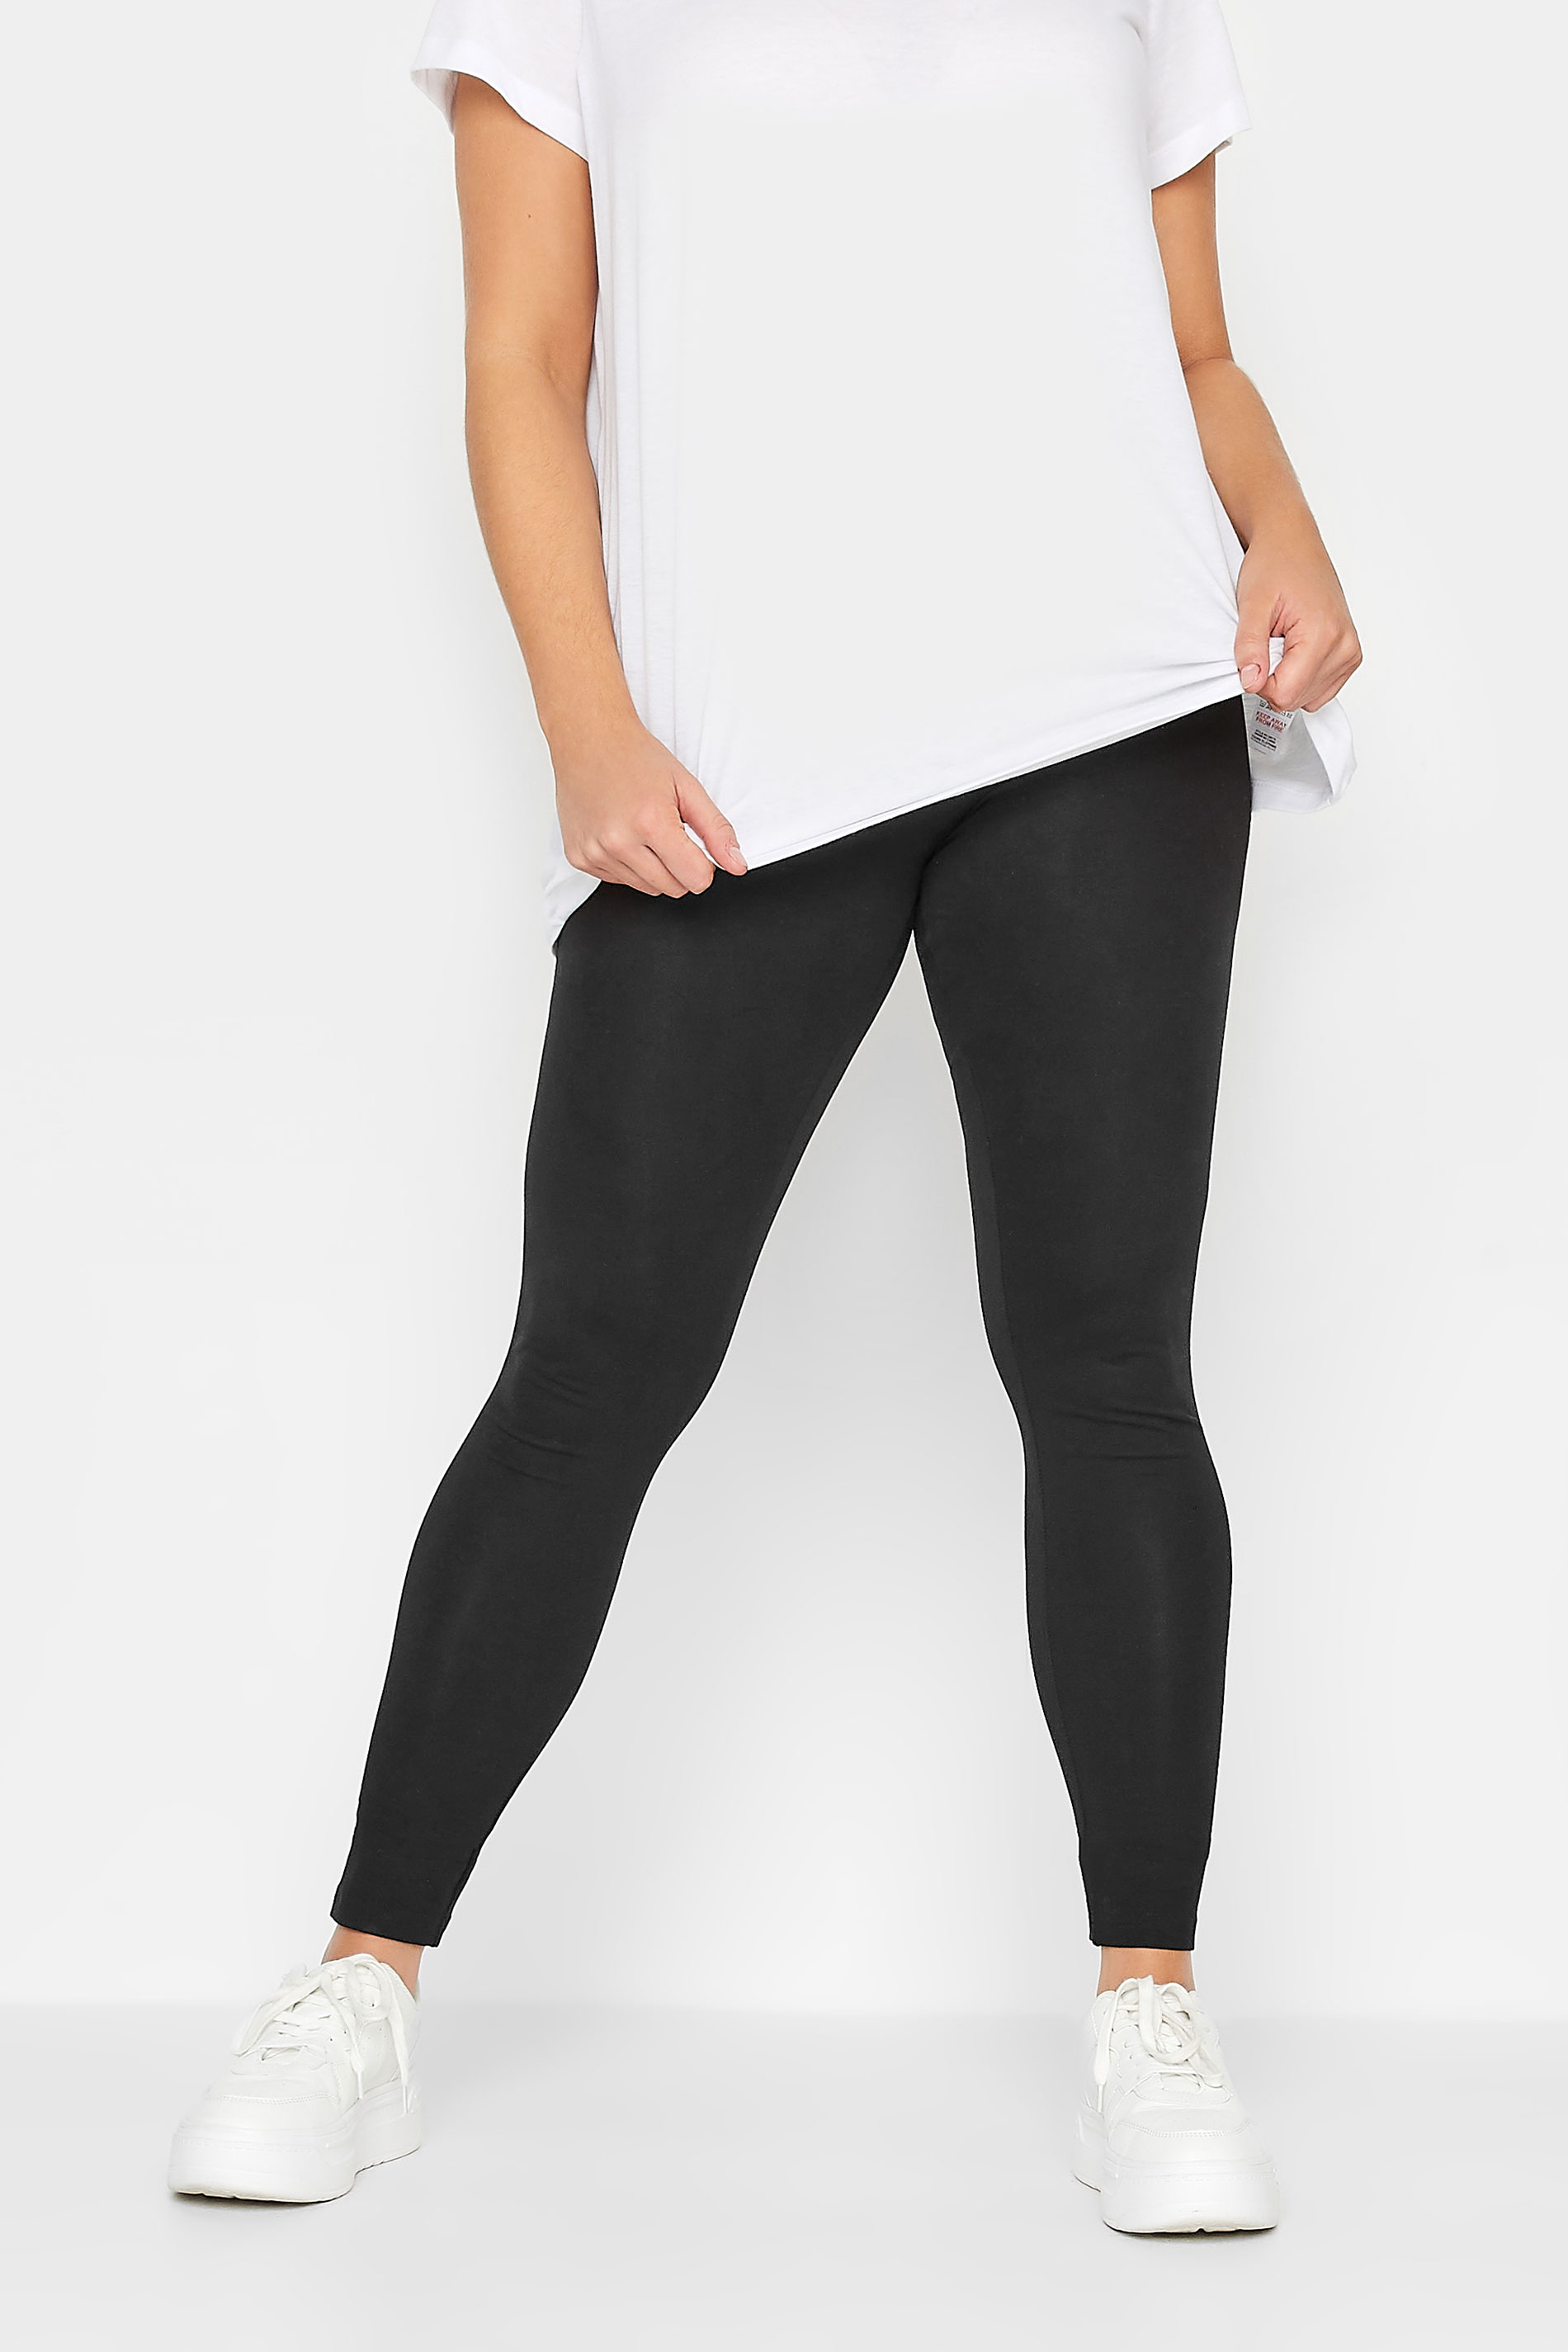 Plus Size Black Cotton Stretch Leggings | Yours Clothing 1